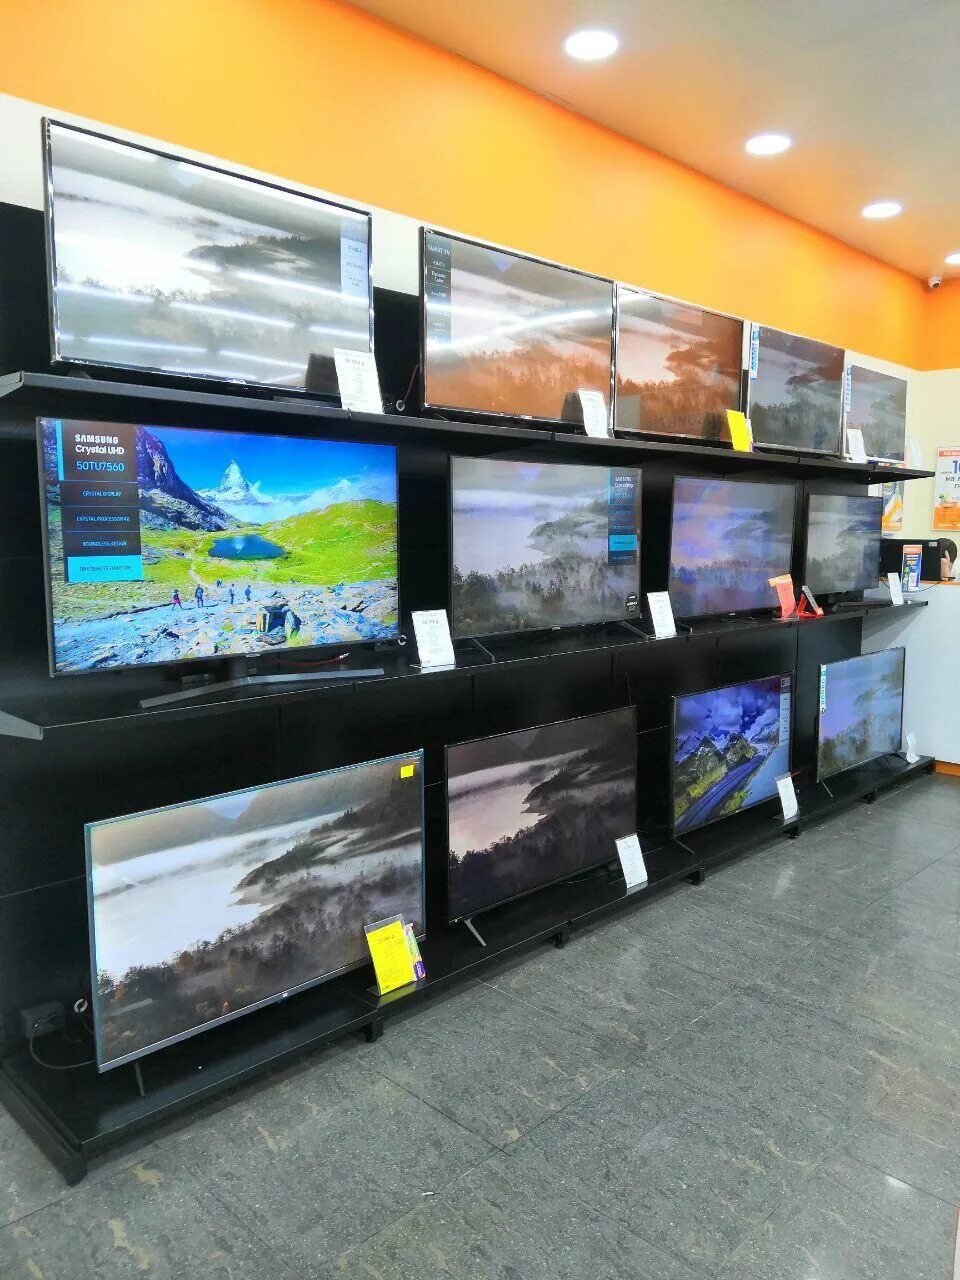 Автомагнитол в СПБ ДНС. СПБ магазин ДНС каталог товаров с ценами и фото болшой телевизор Samsung.